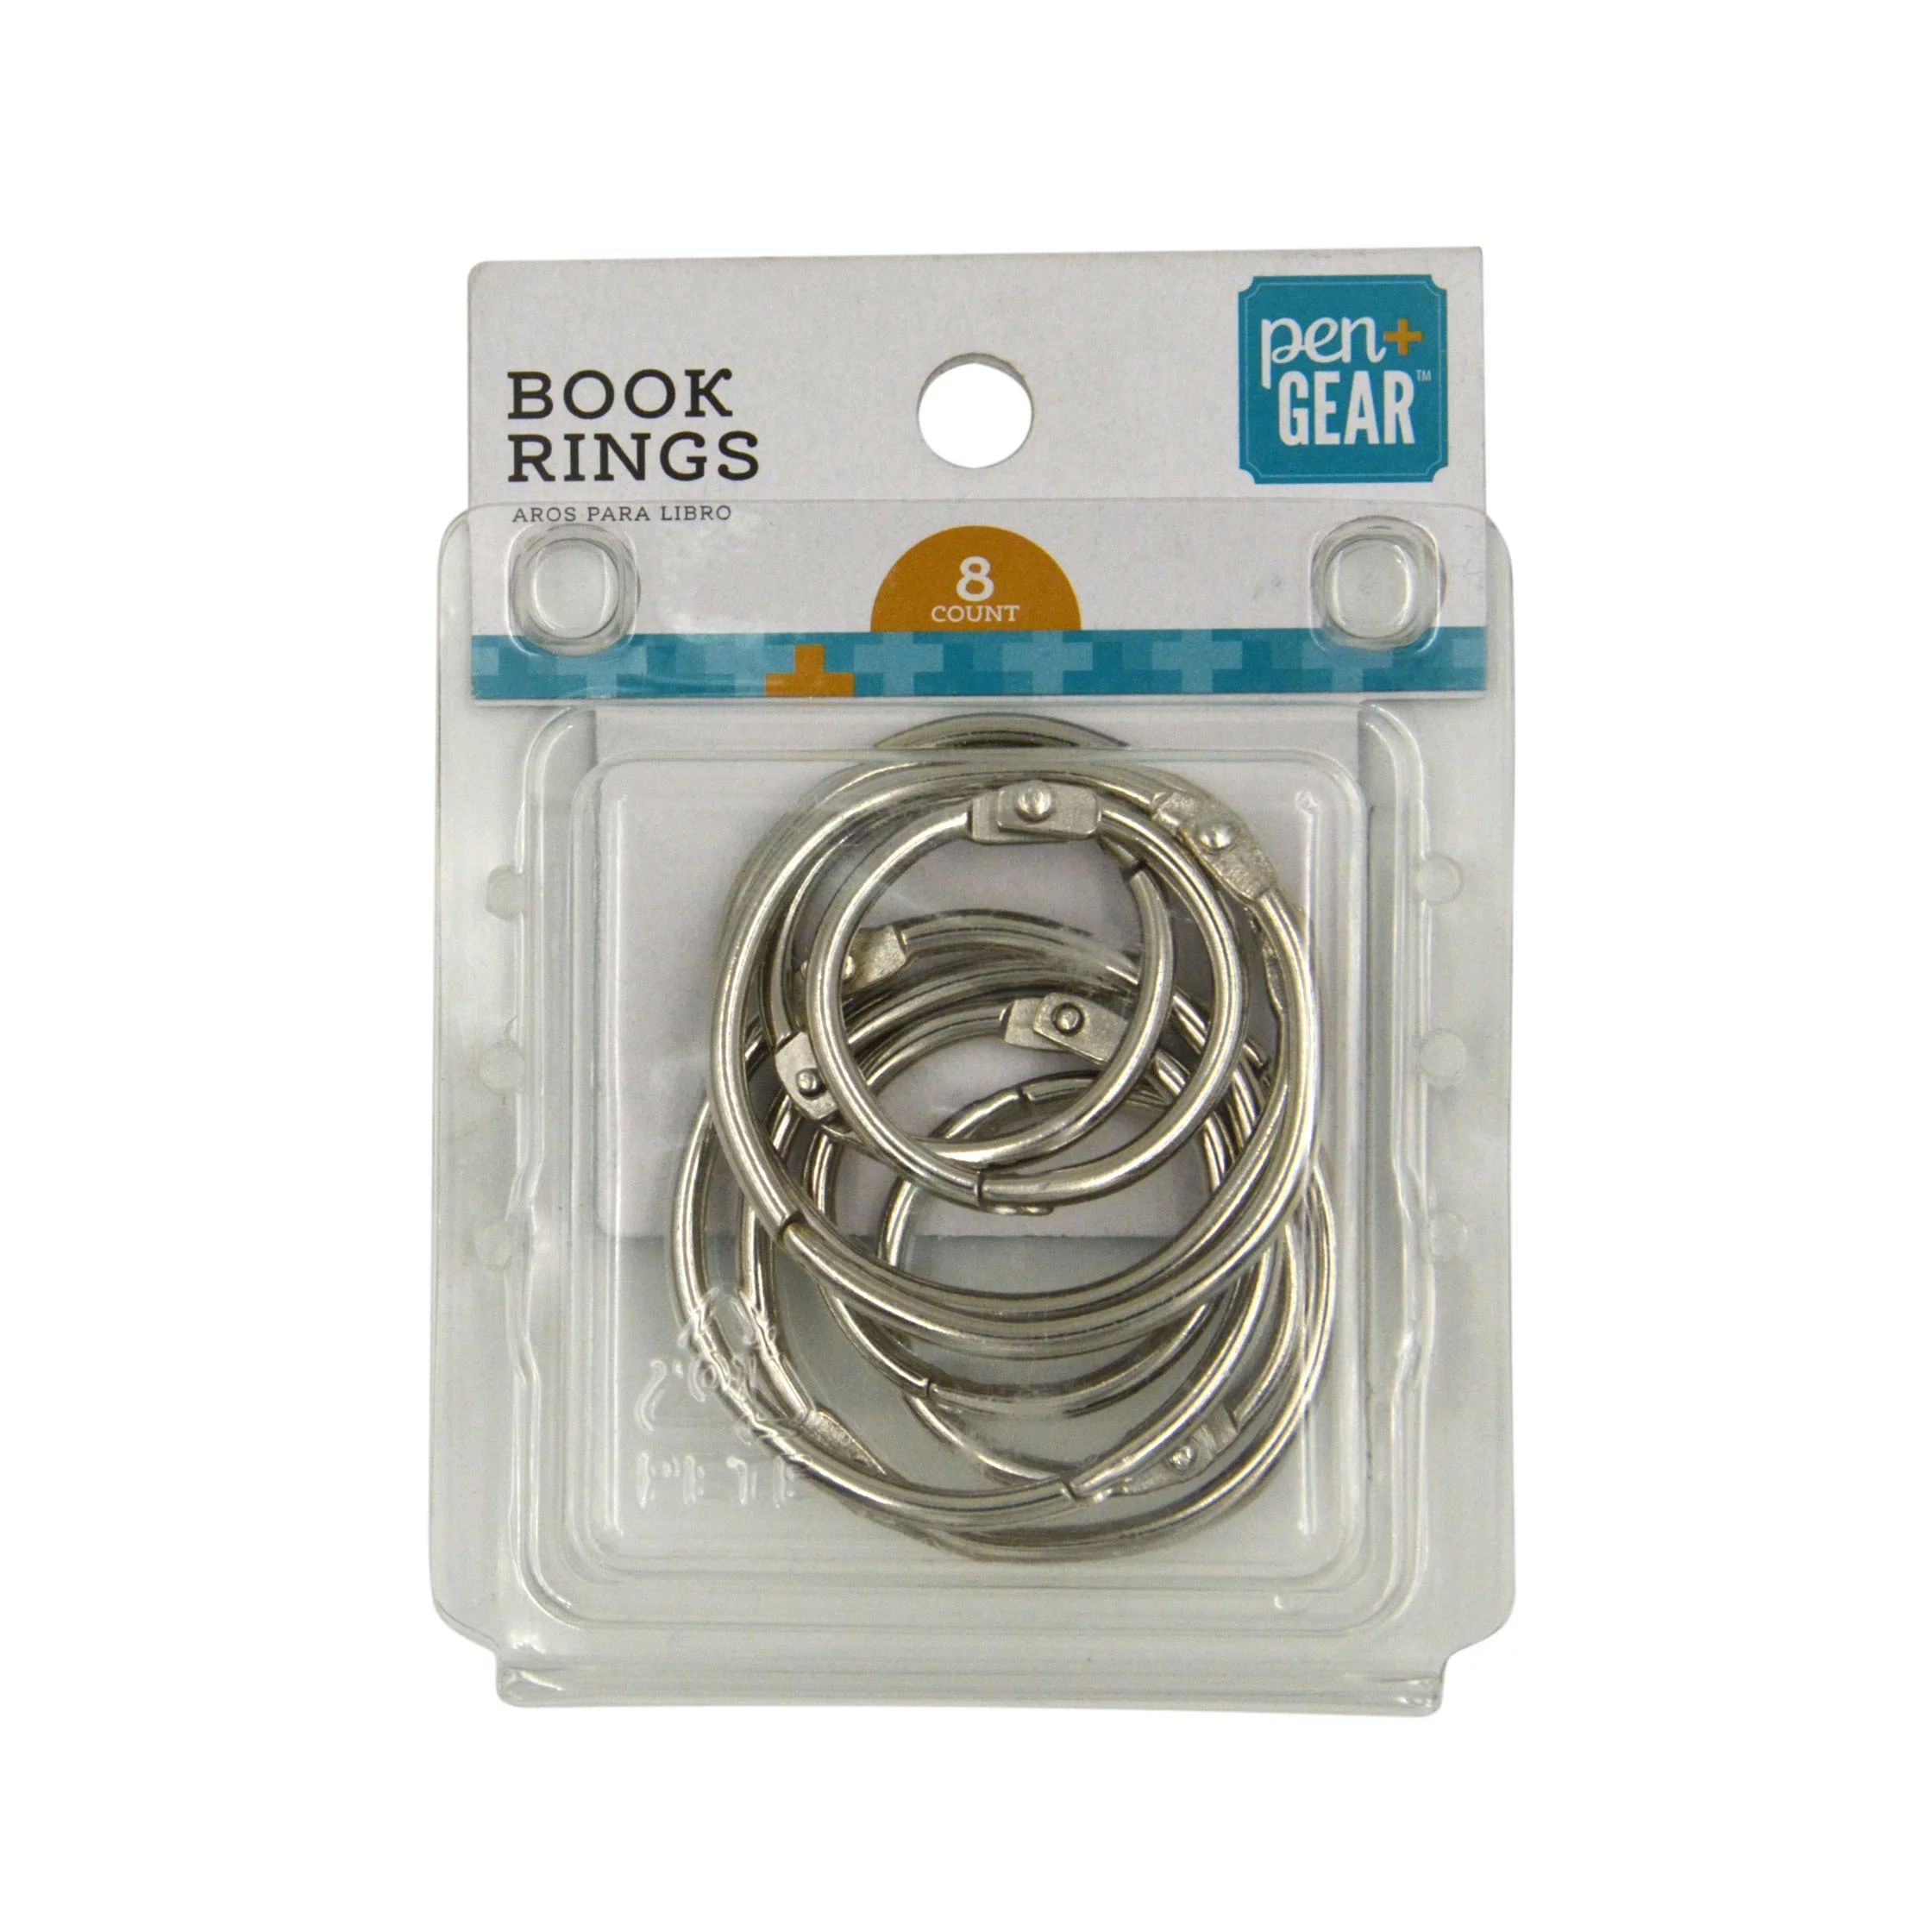 Pen + Gear Metal Book Rings, 8 Counts, Silver | Walmart (US)